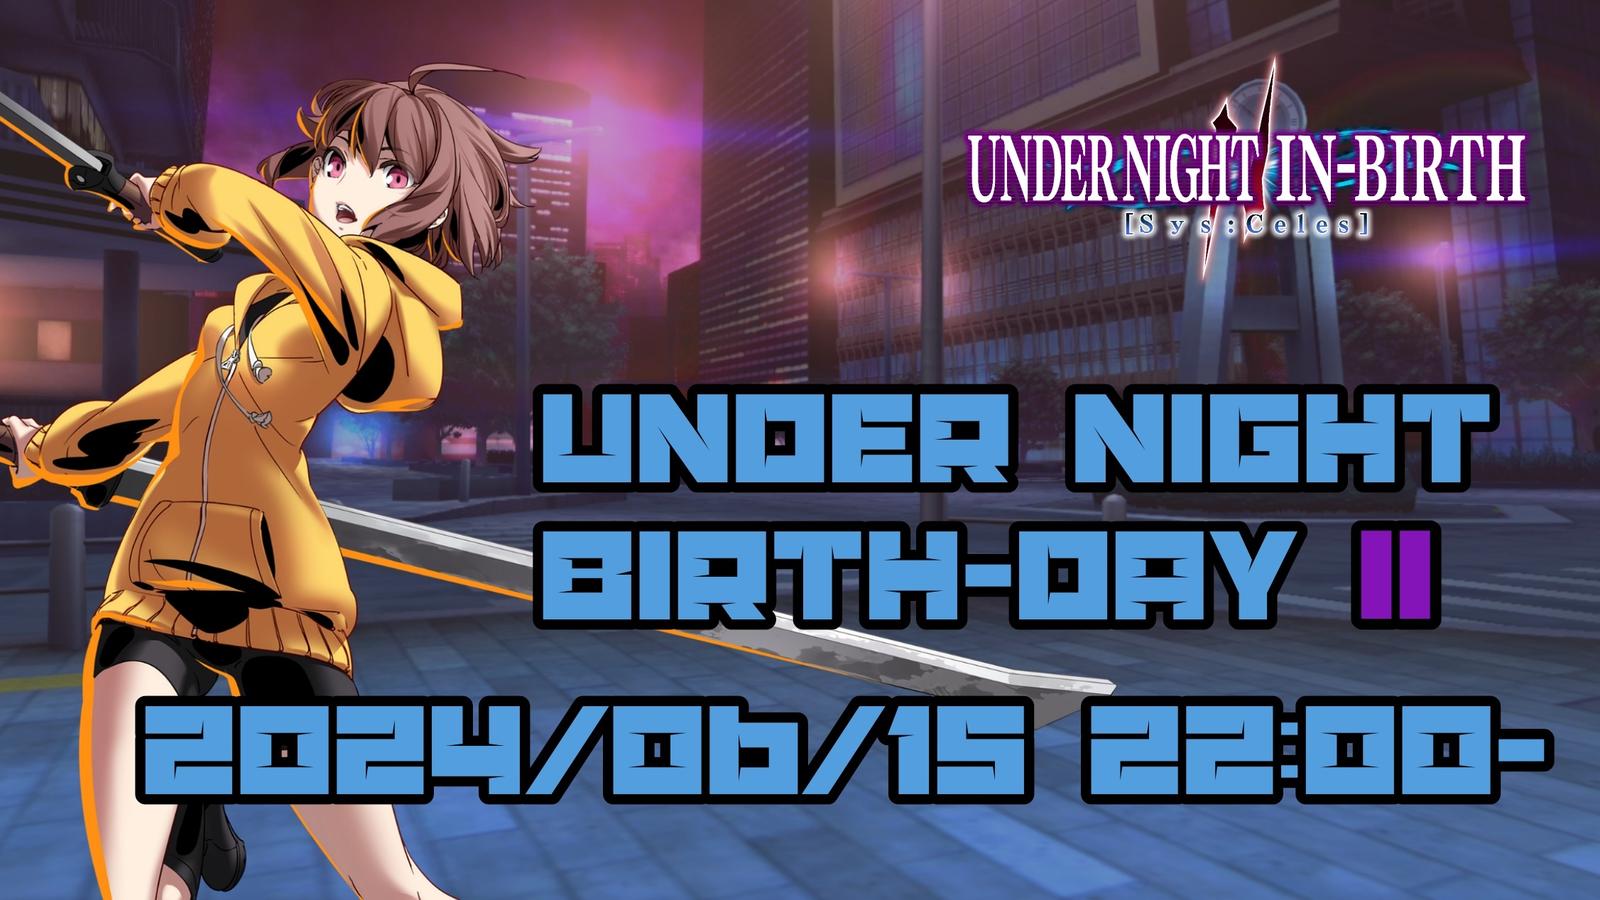 UNDER NIGHT BIRTH-DAY Ⅱ #4